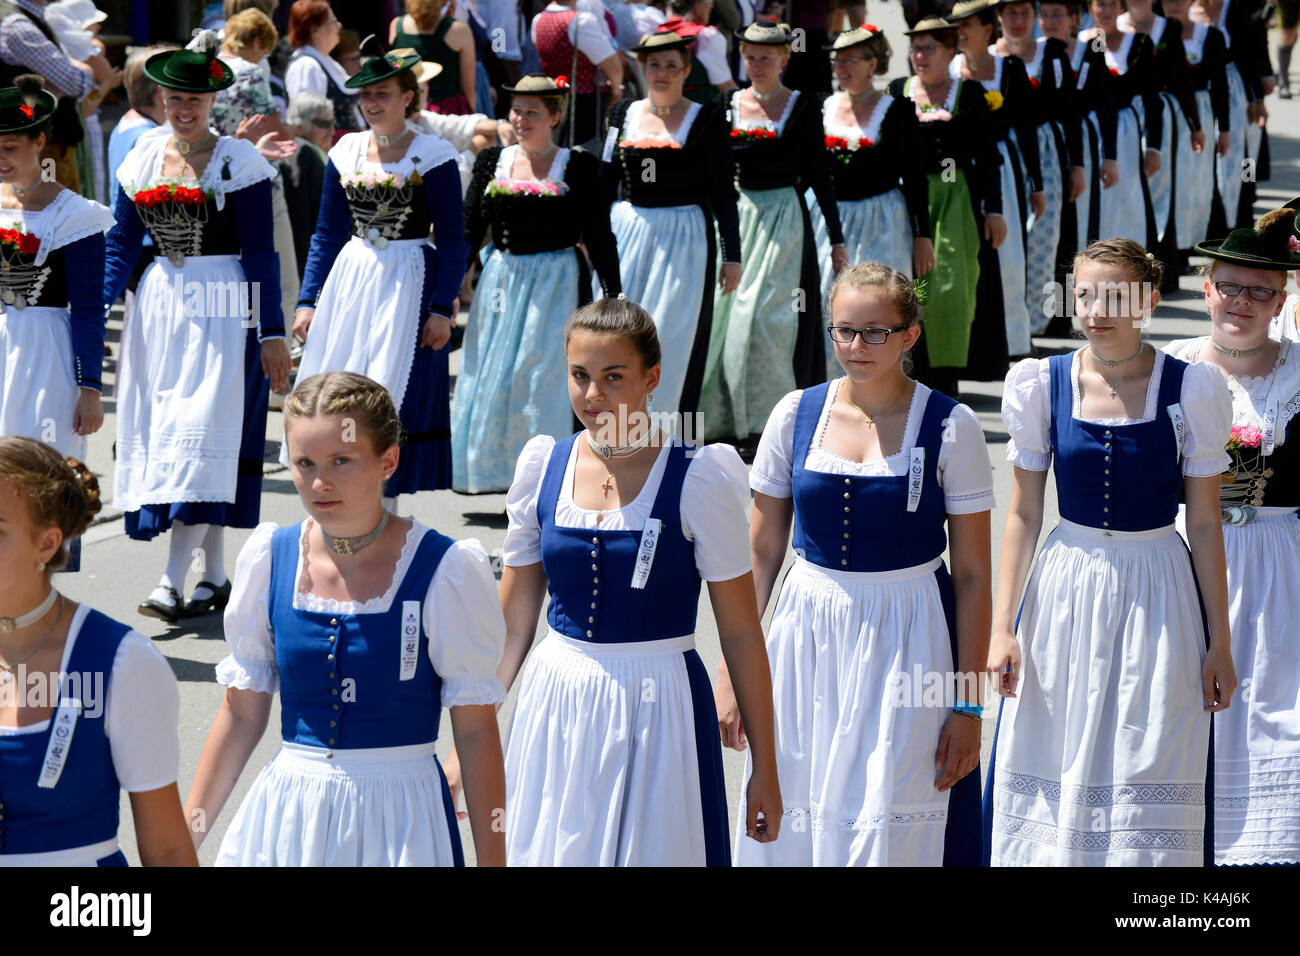 Traditional costume parade, Gaufest Loisachgau, Egling, Upper Bavaria, Bavaria, Germany Stock Photo